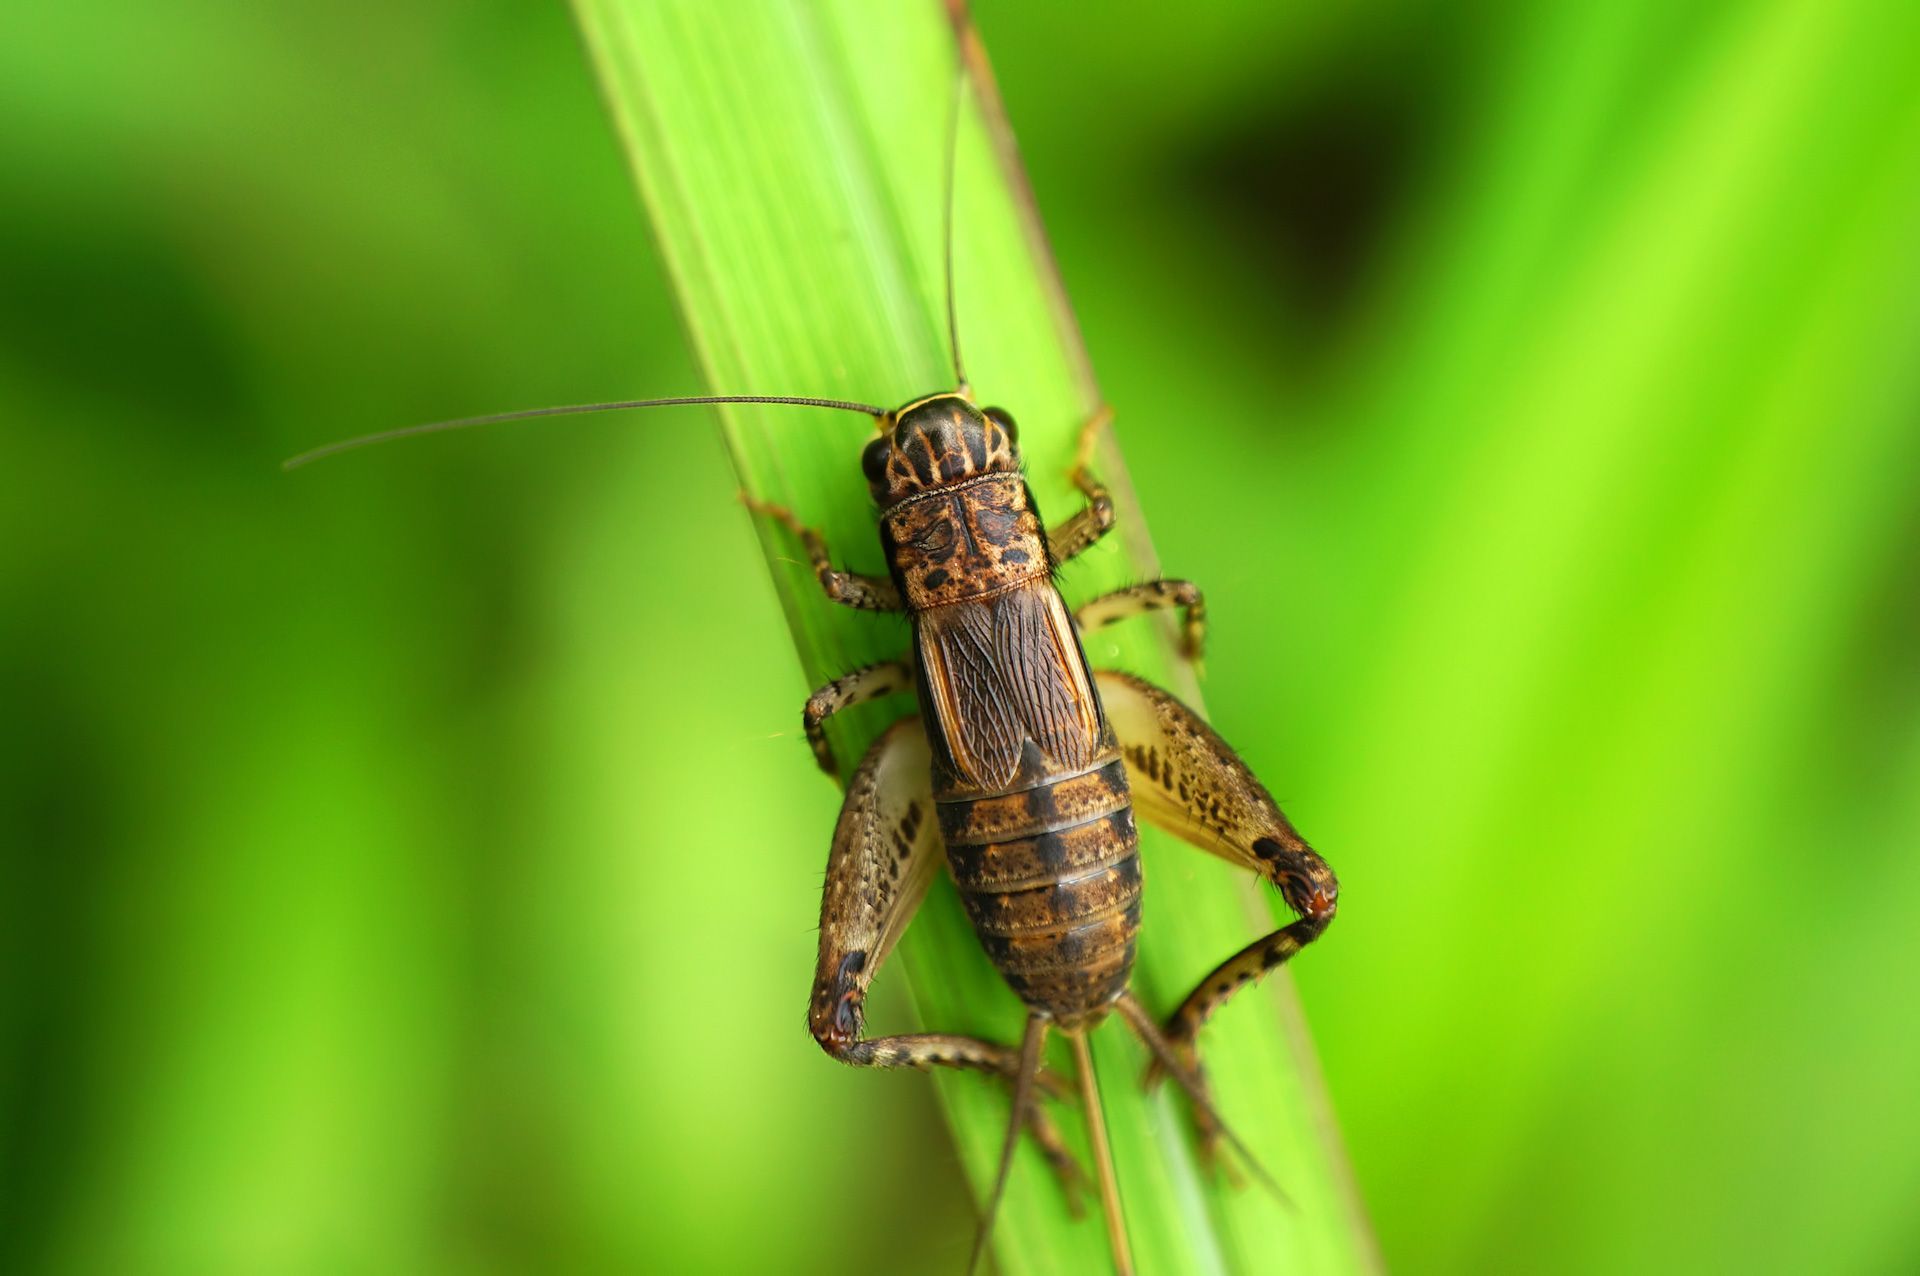 A close up of a grasshopper on a green leaf